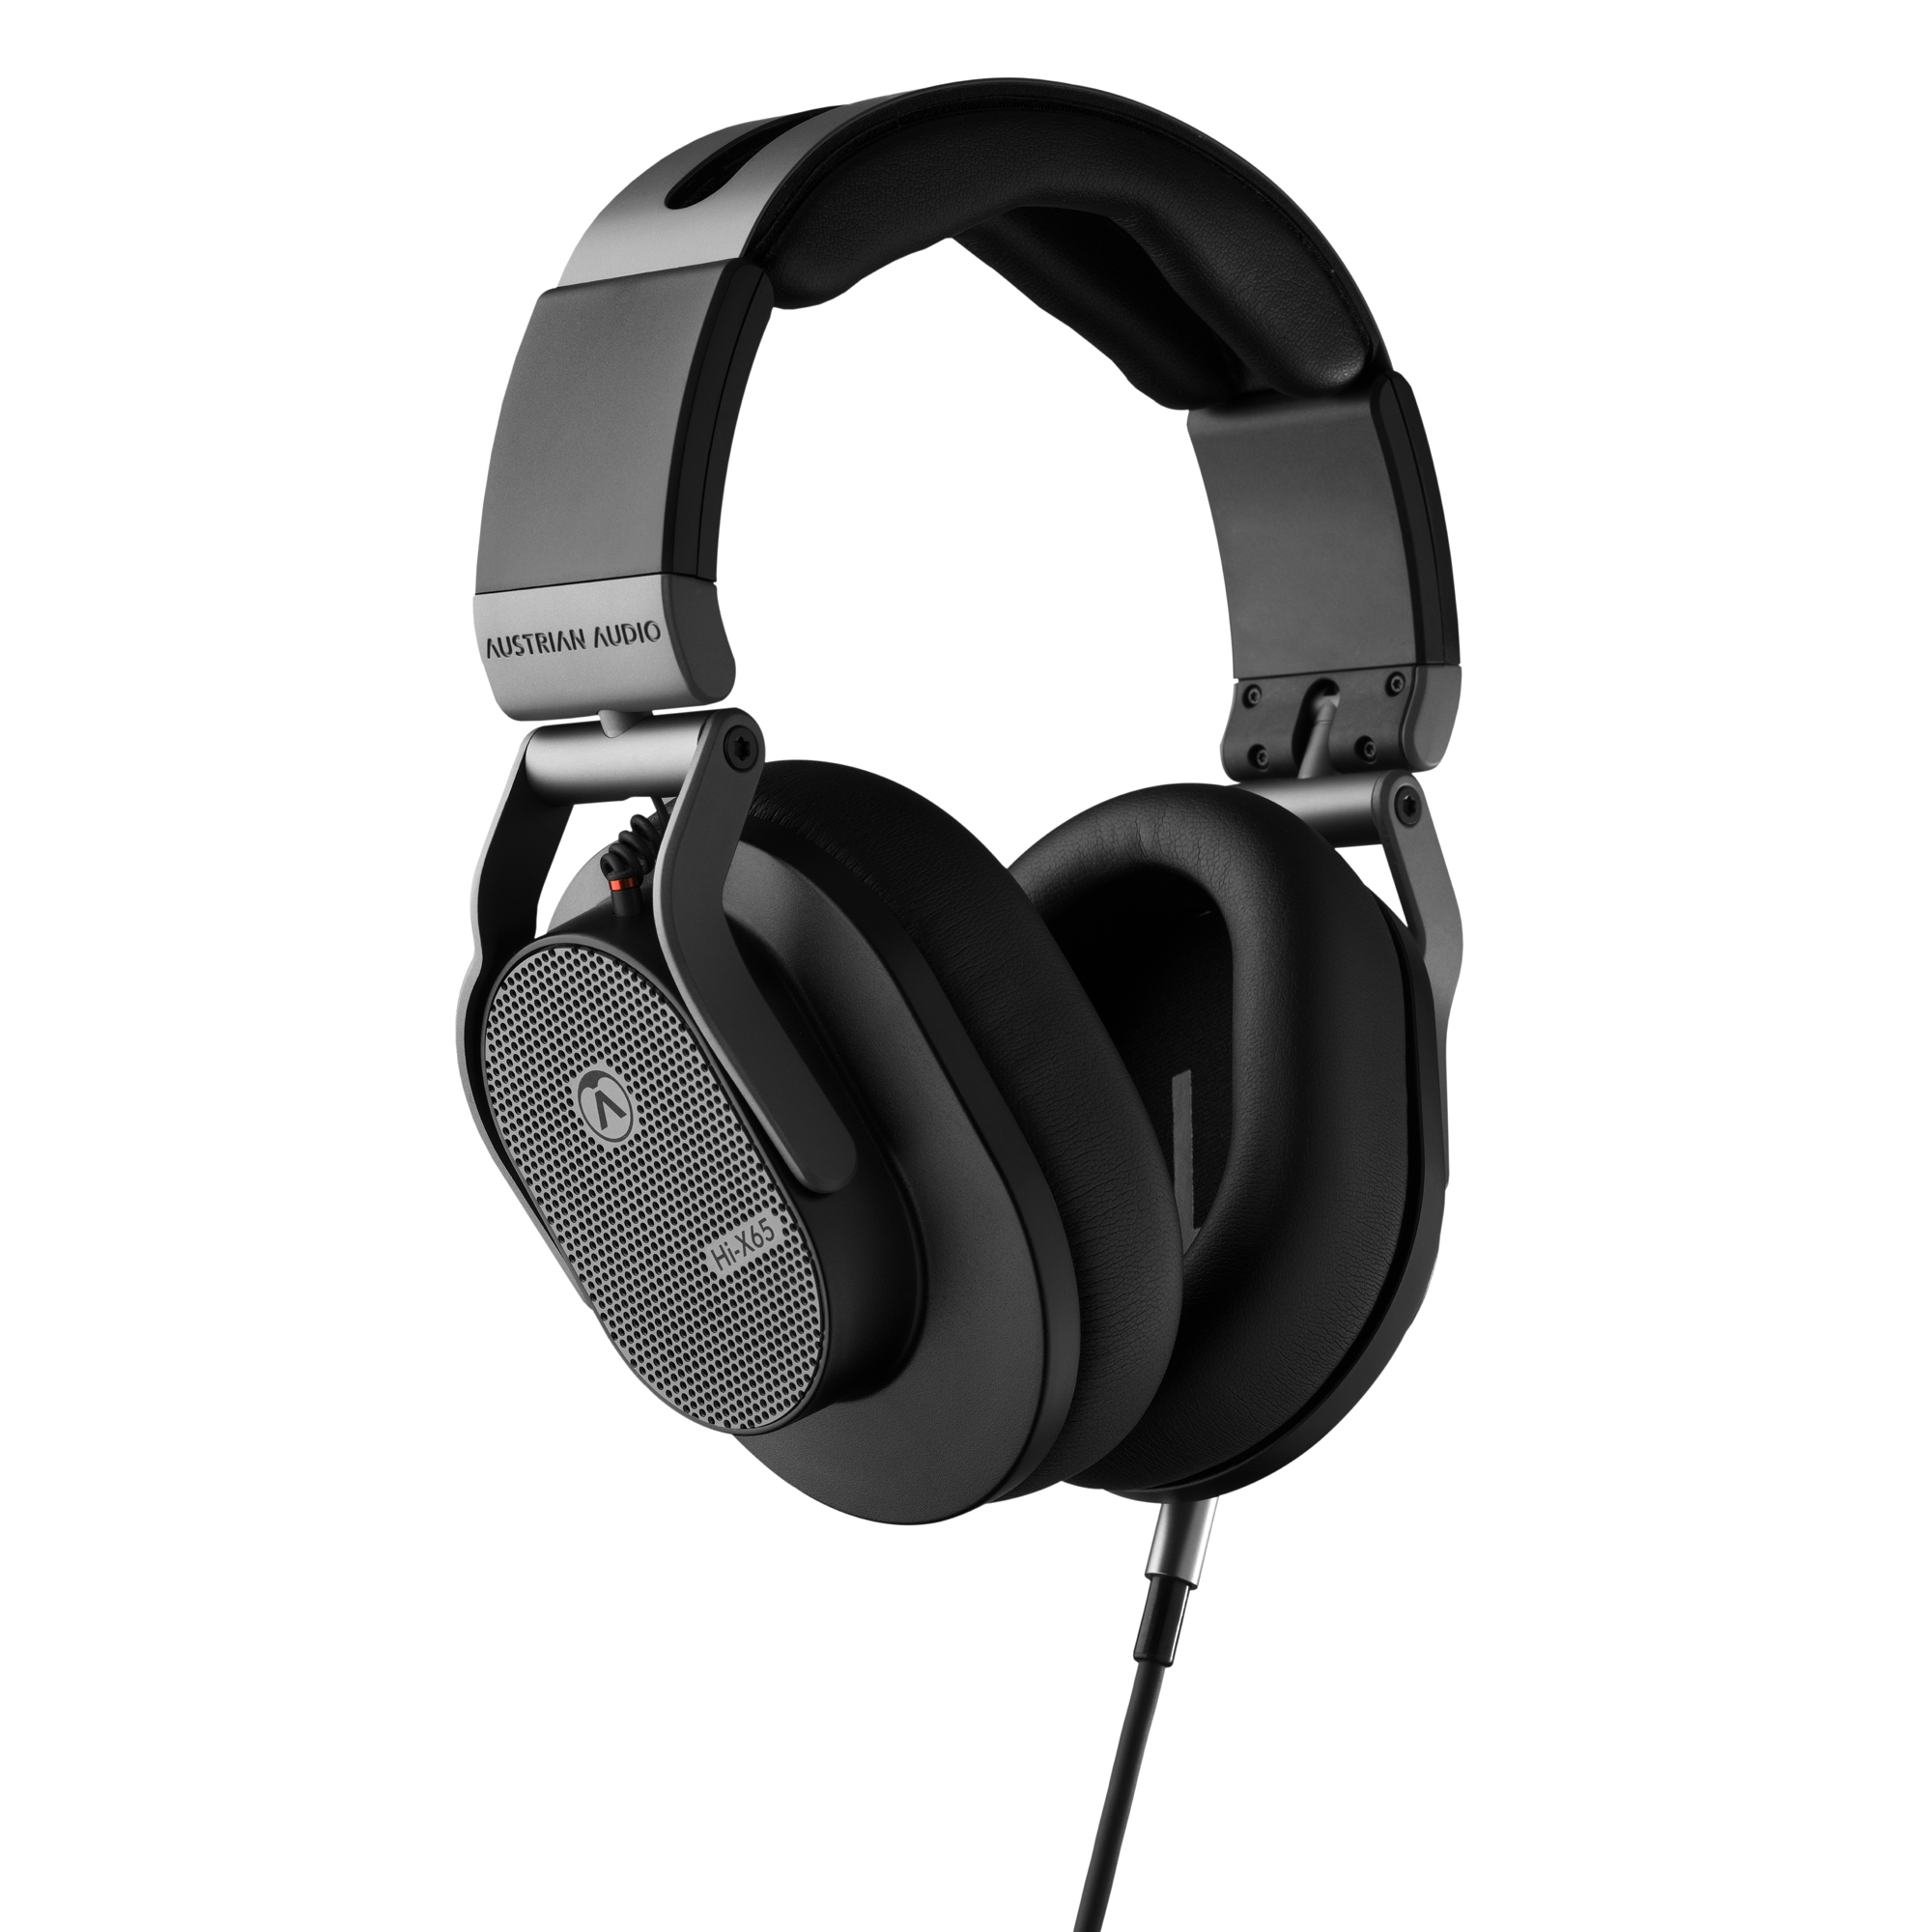 Austrian Audio Releases Hi-X65 Professional Open-Back Over-Ear